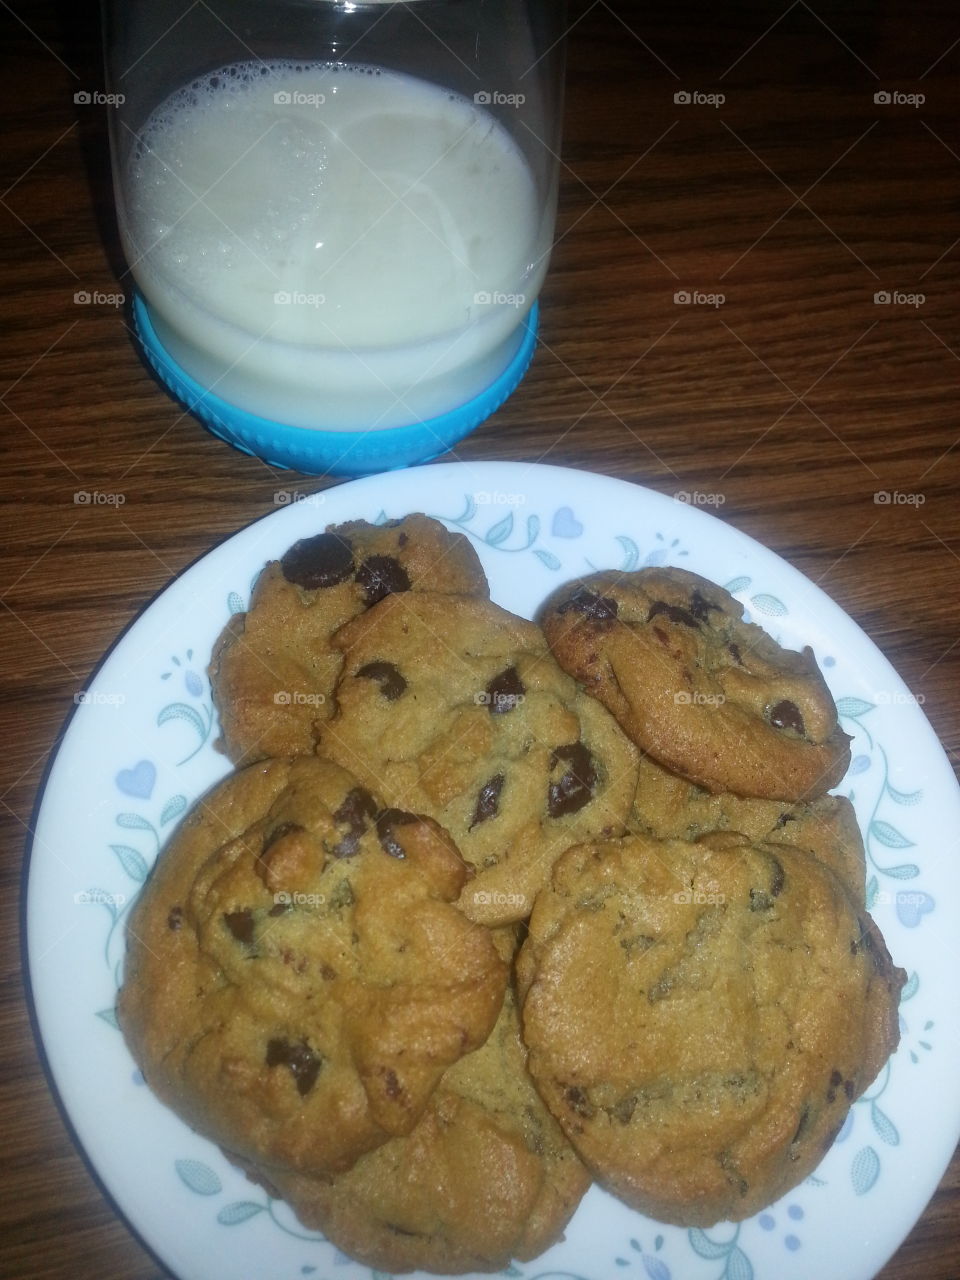 homemade cookies and milk. after school snack :)